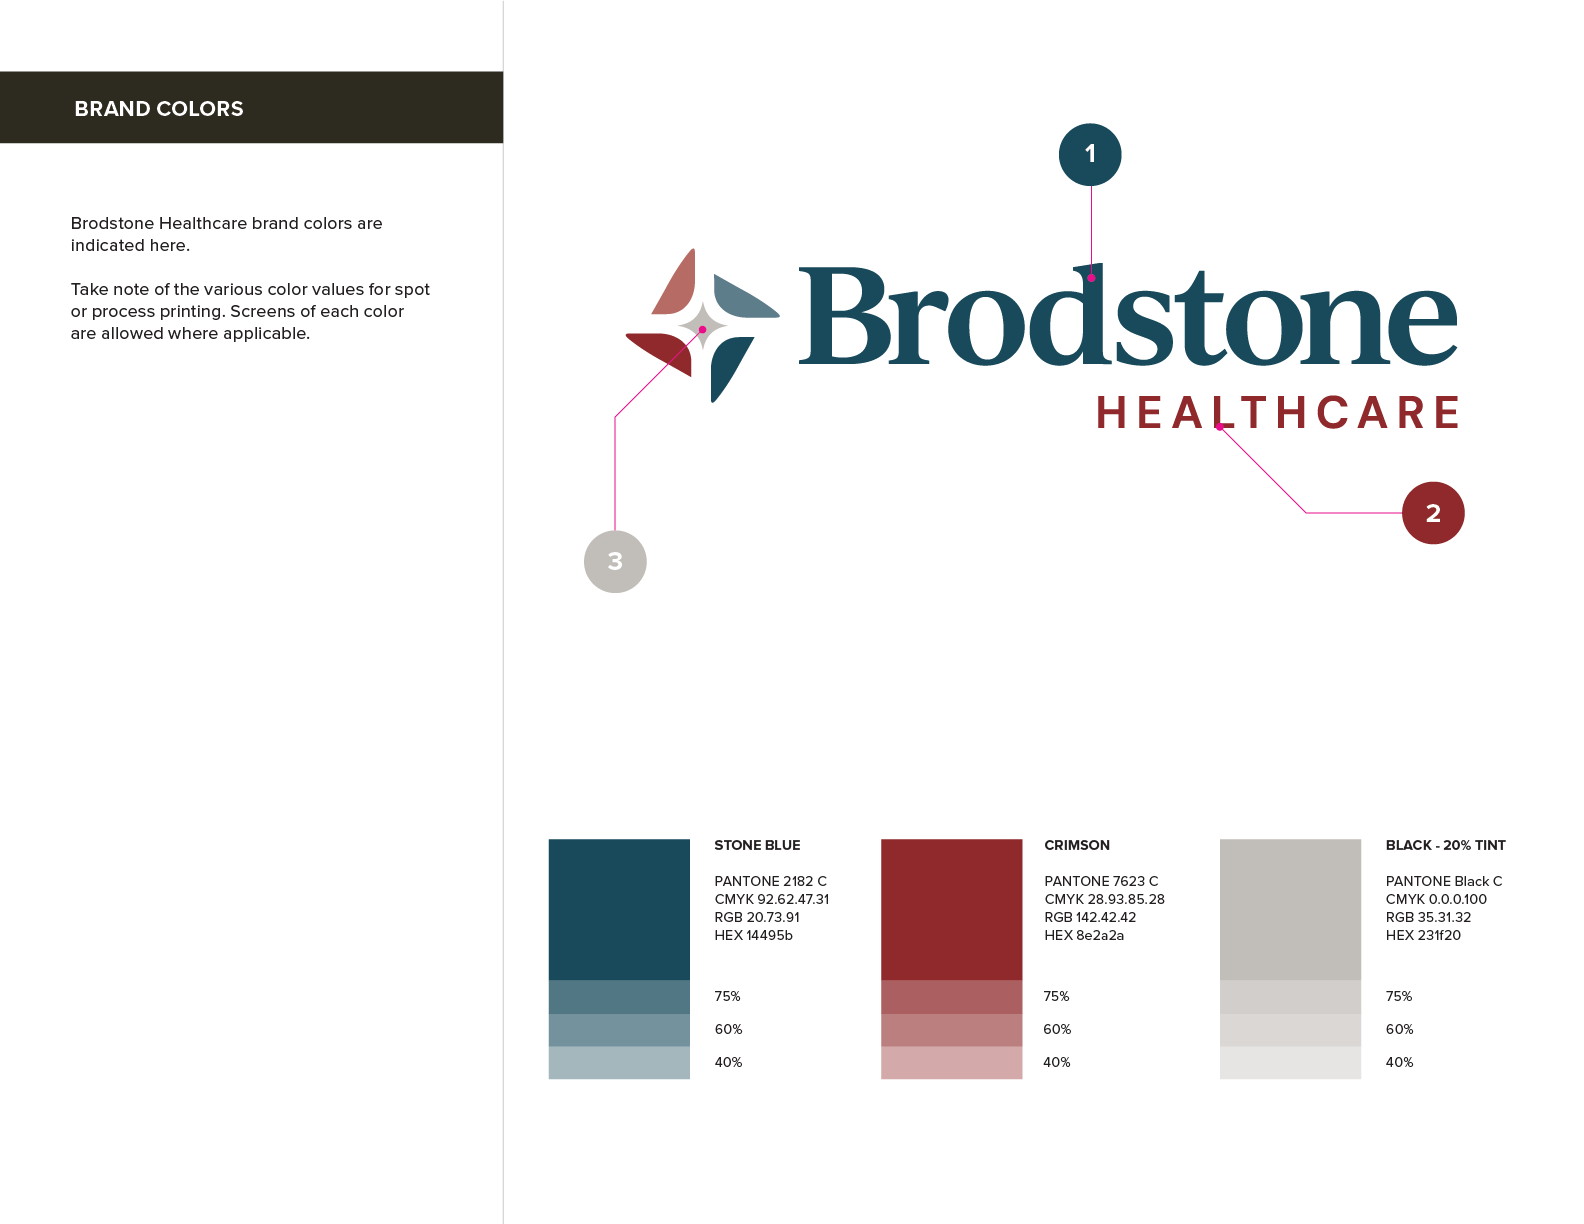 Brodstone Healthcare Brand Guide Colors